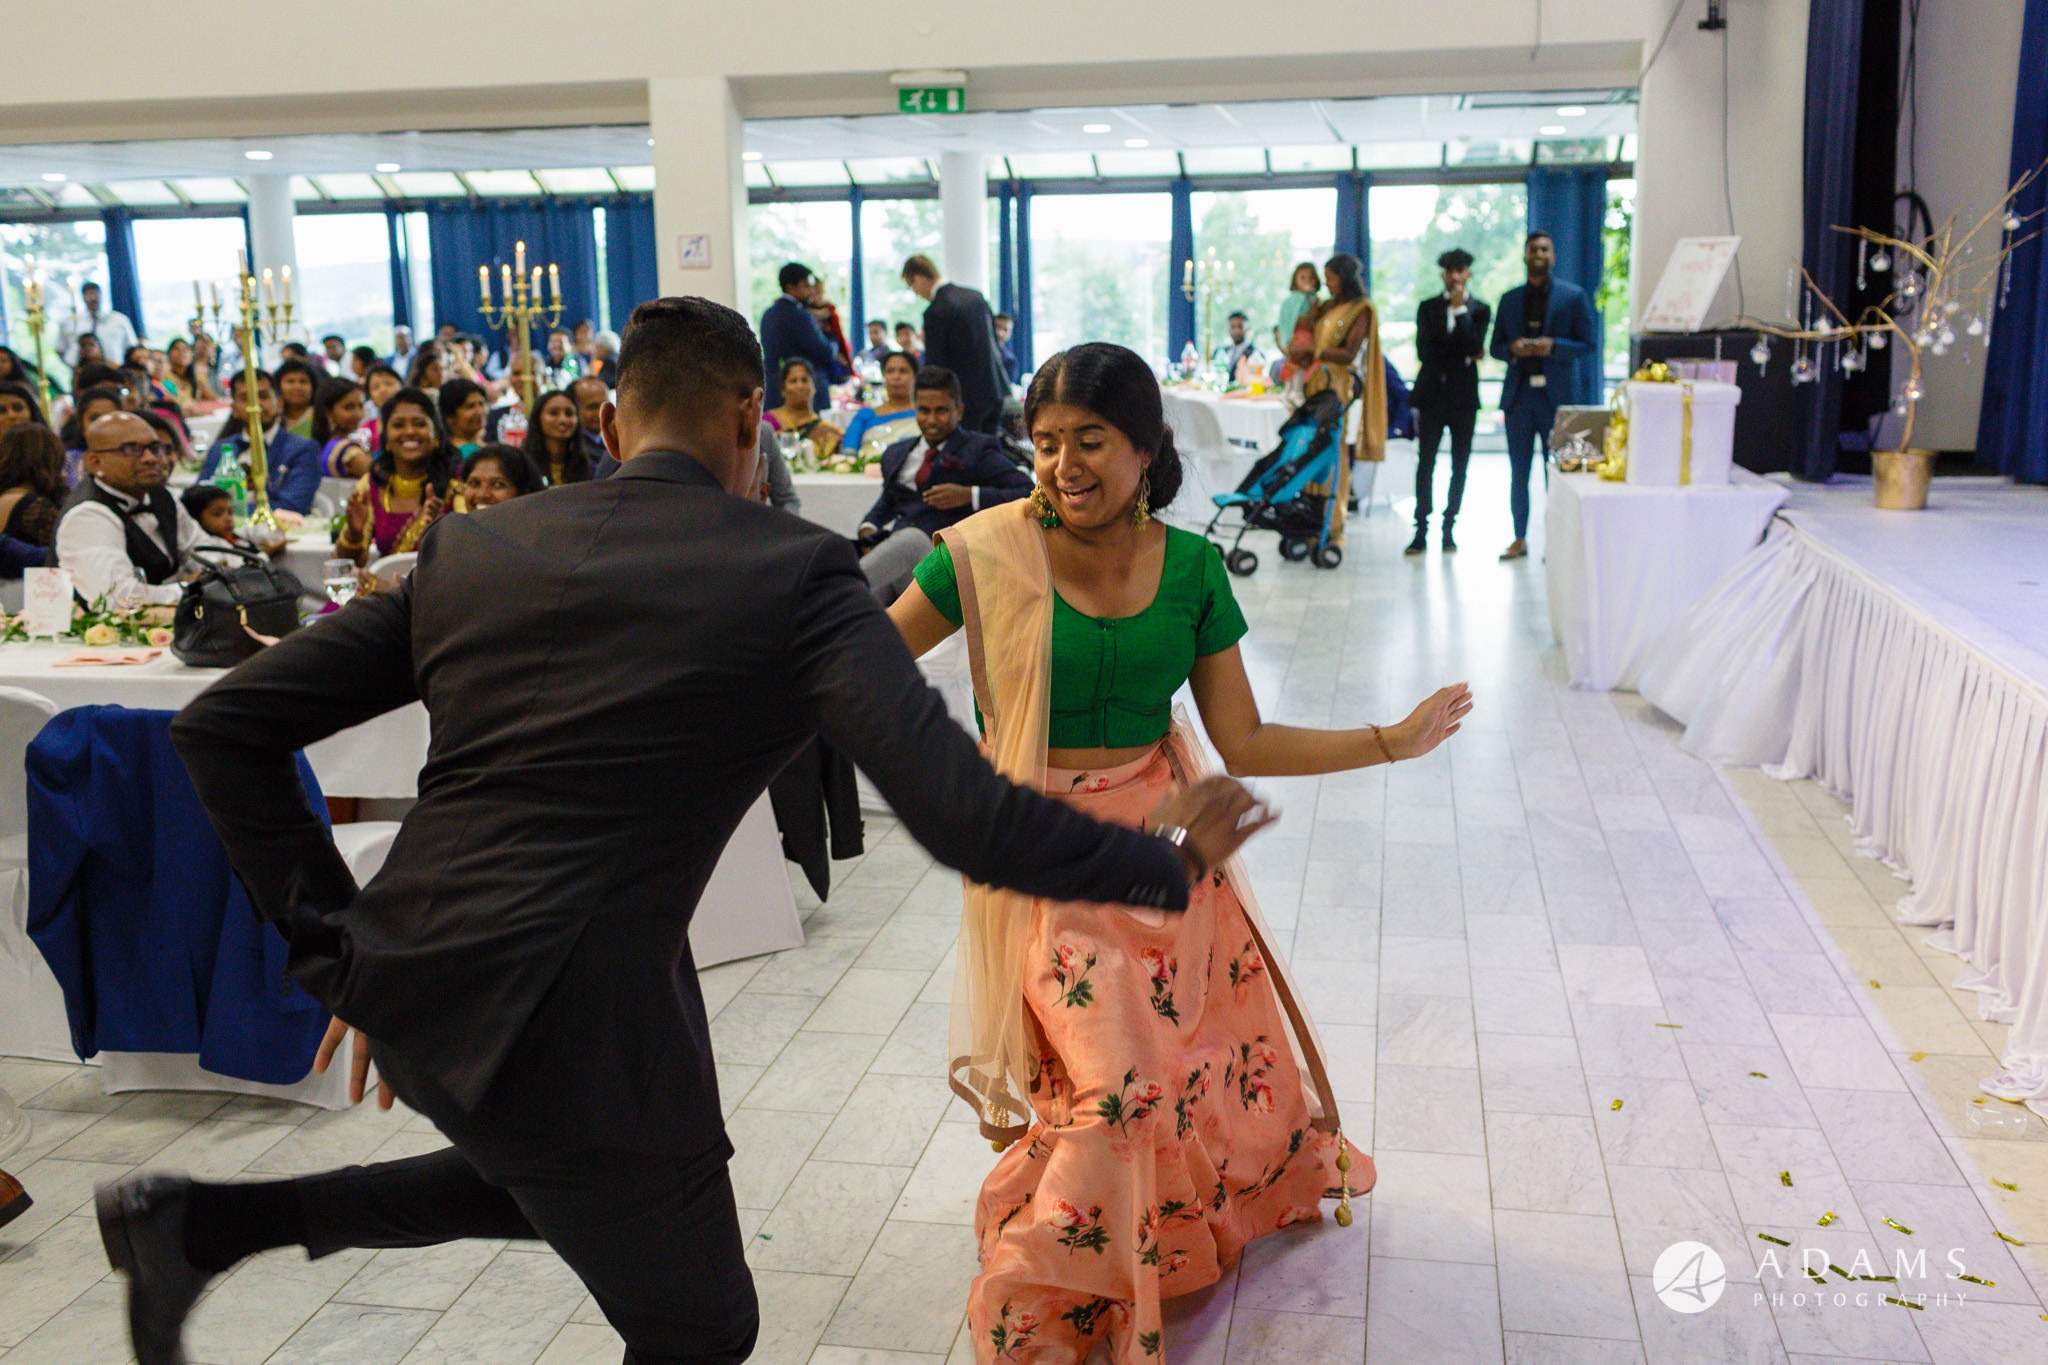 Norway Tamil Wedding family dancing